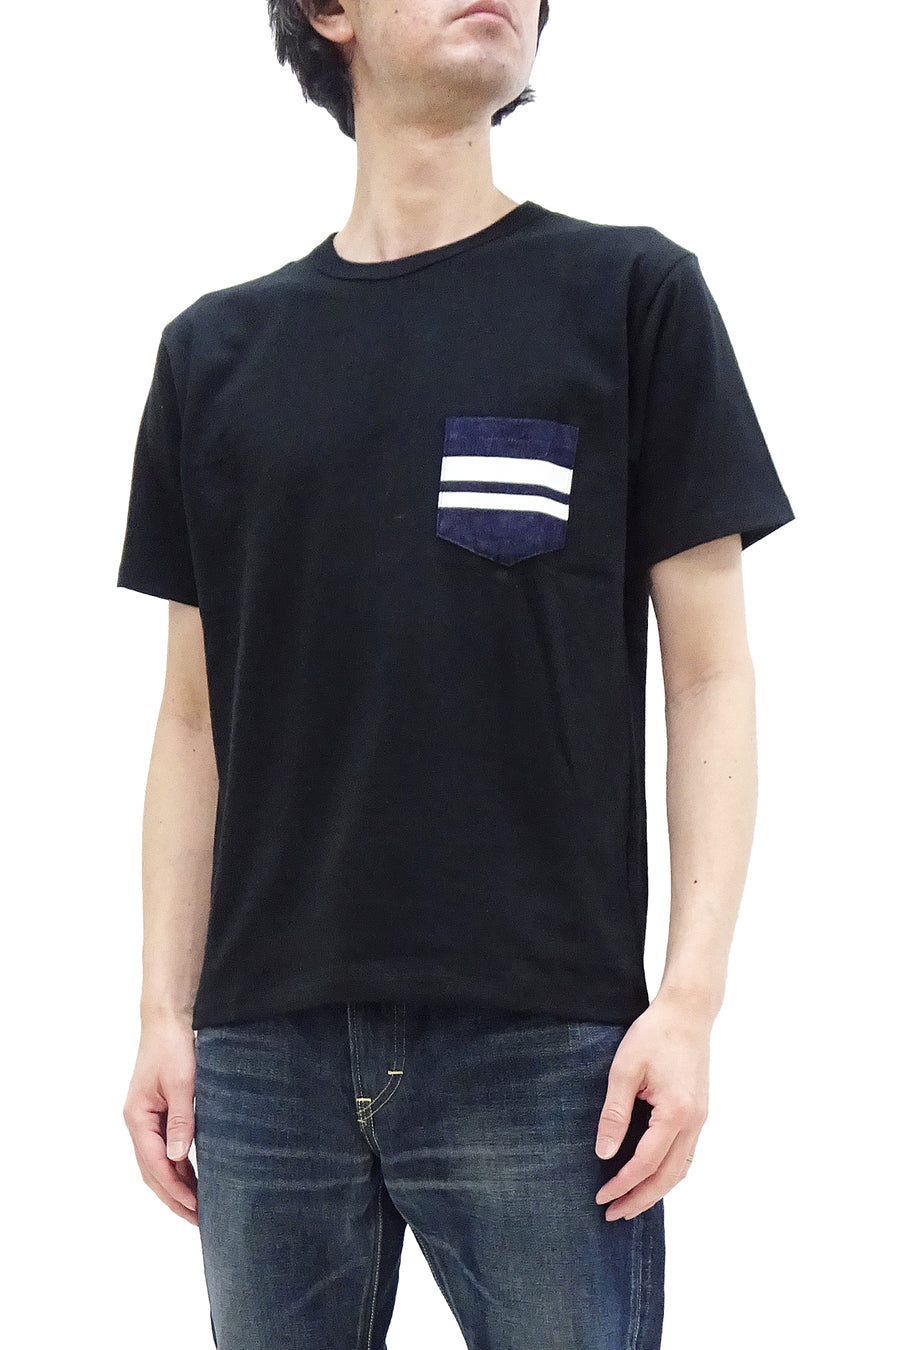 Short Pocket RODEO-JAPAN – Jeans Shirt with Men\'s Momotaro Pine-Avenue Clothes Sleeve GTB shop T-shirt St Tee